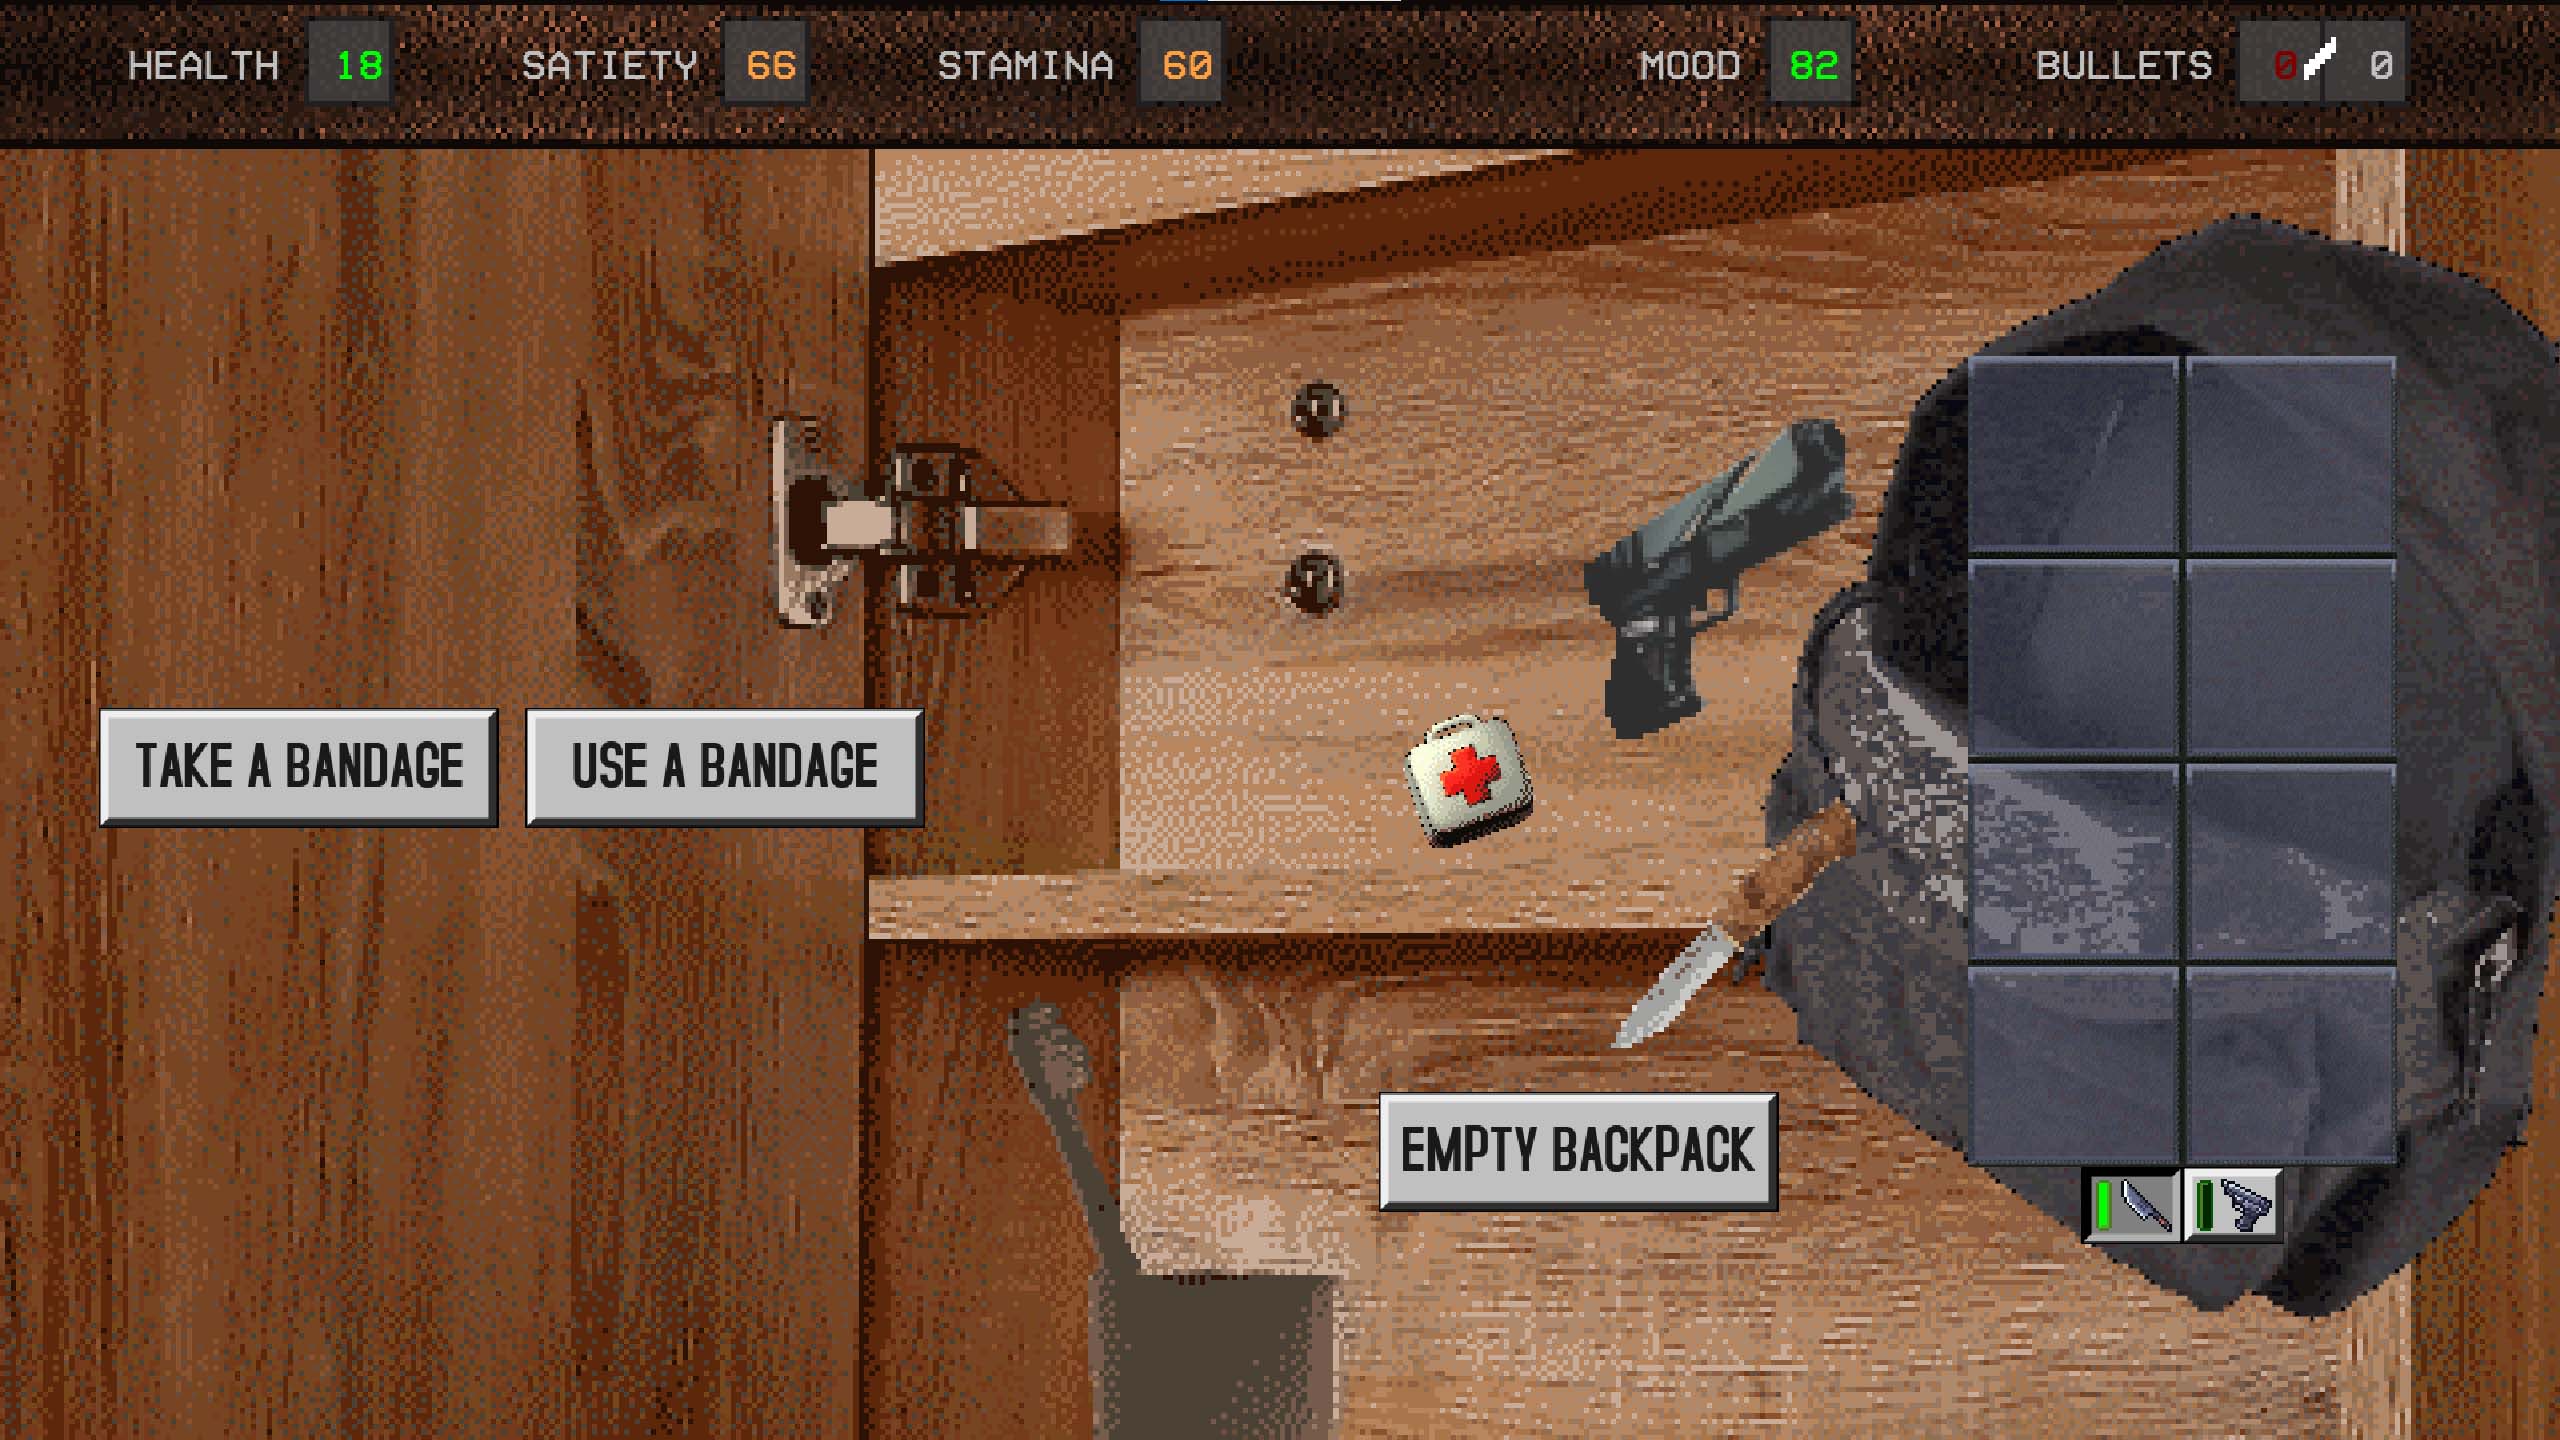 gameplay screenshot - medicine cabinet